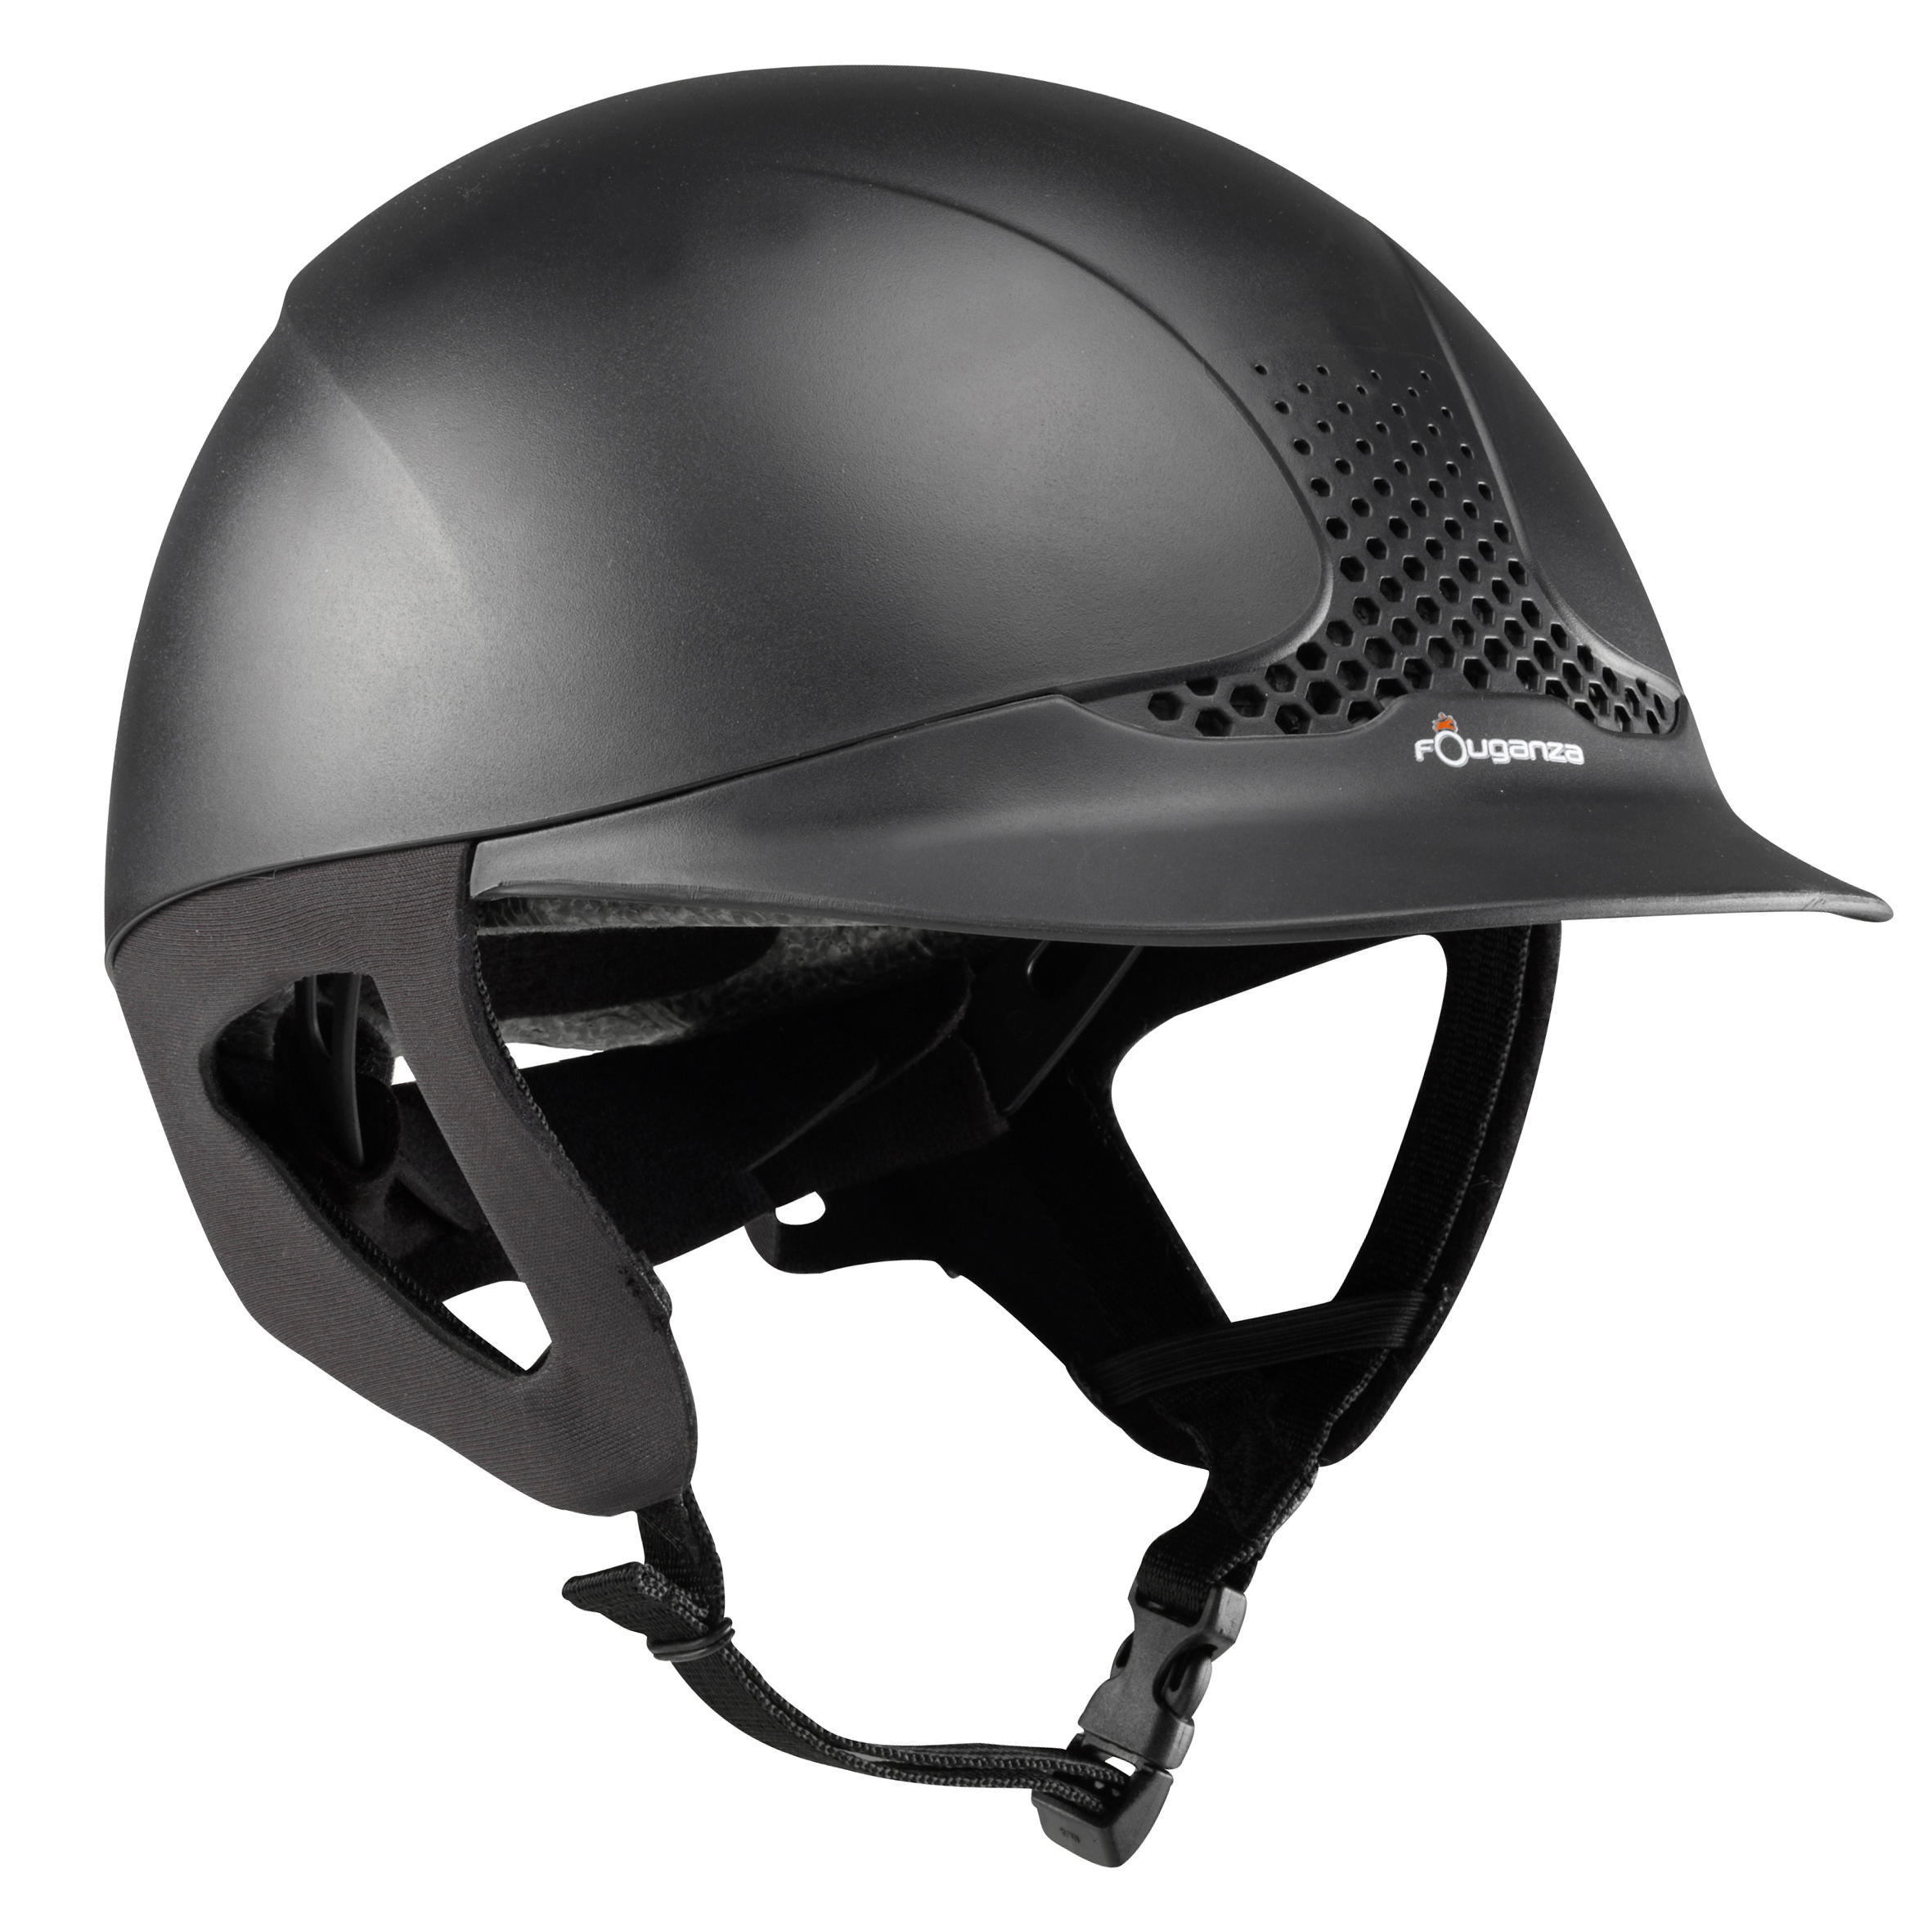 Buy Safety Horse Riding Helmet Black 